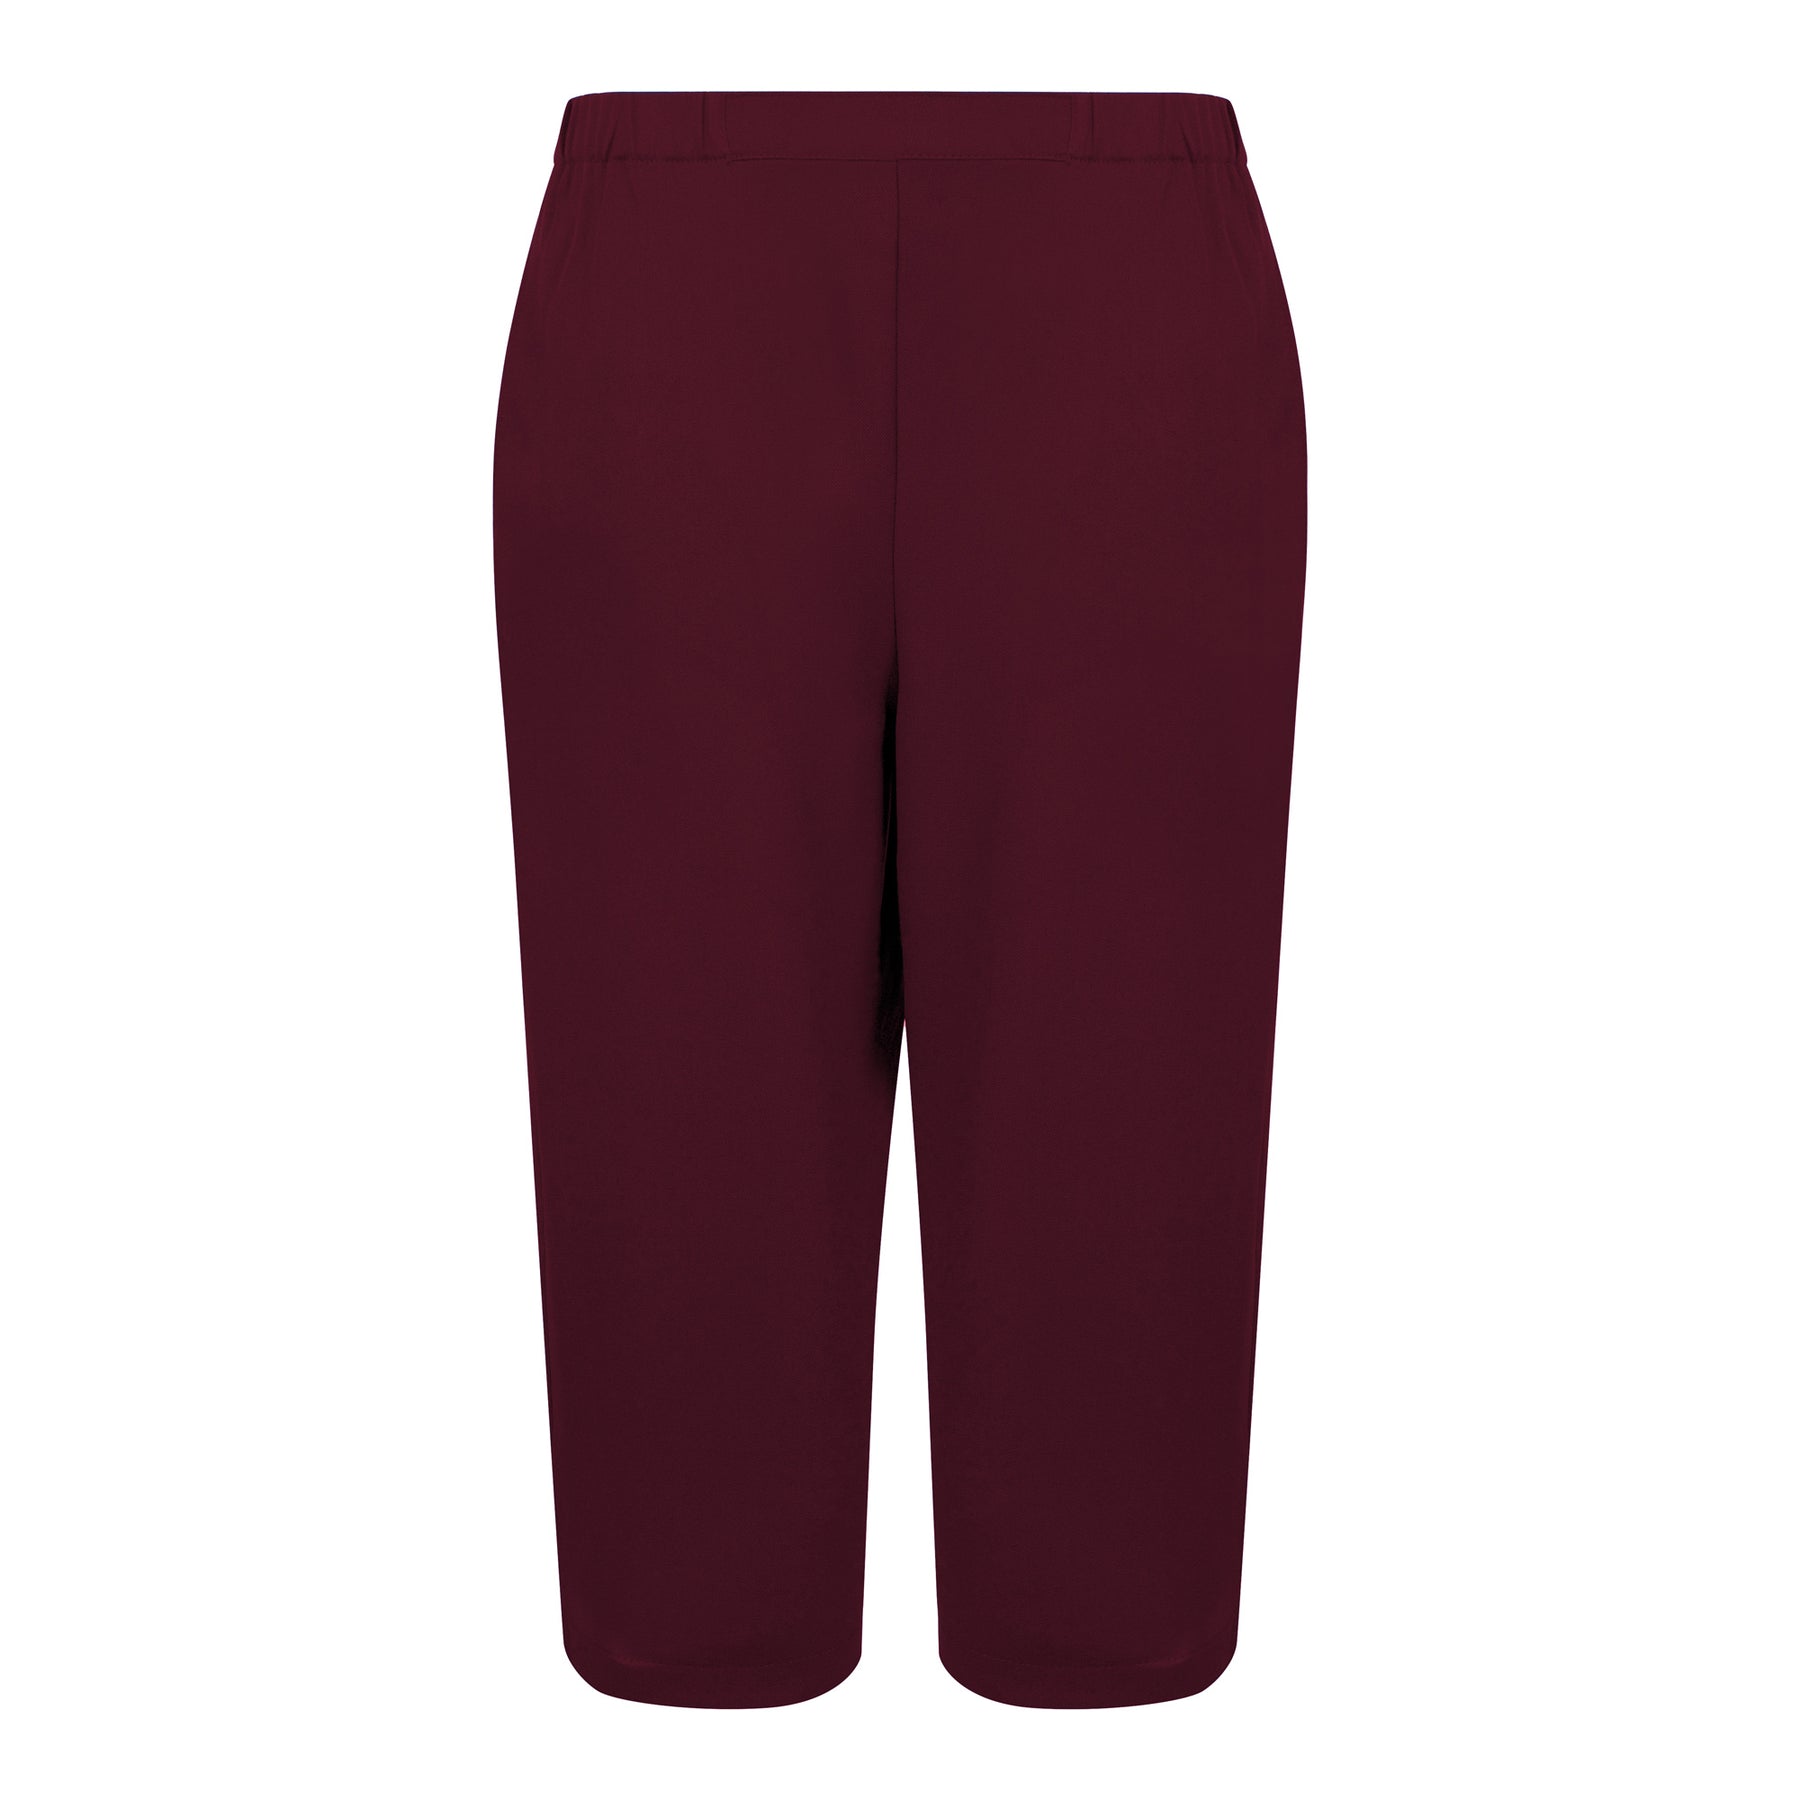 Shop Ladies Cropped Trousers Online Australia - Scanlan Theodore UK